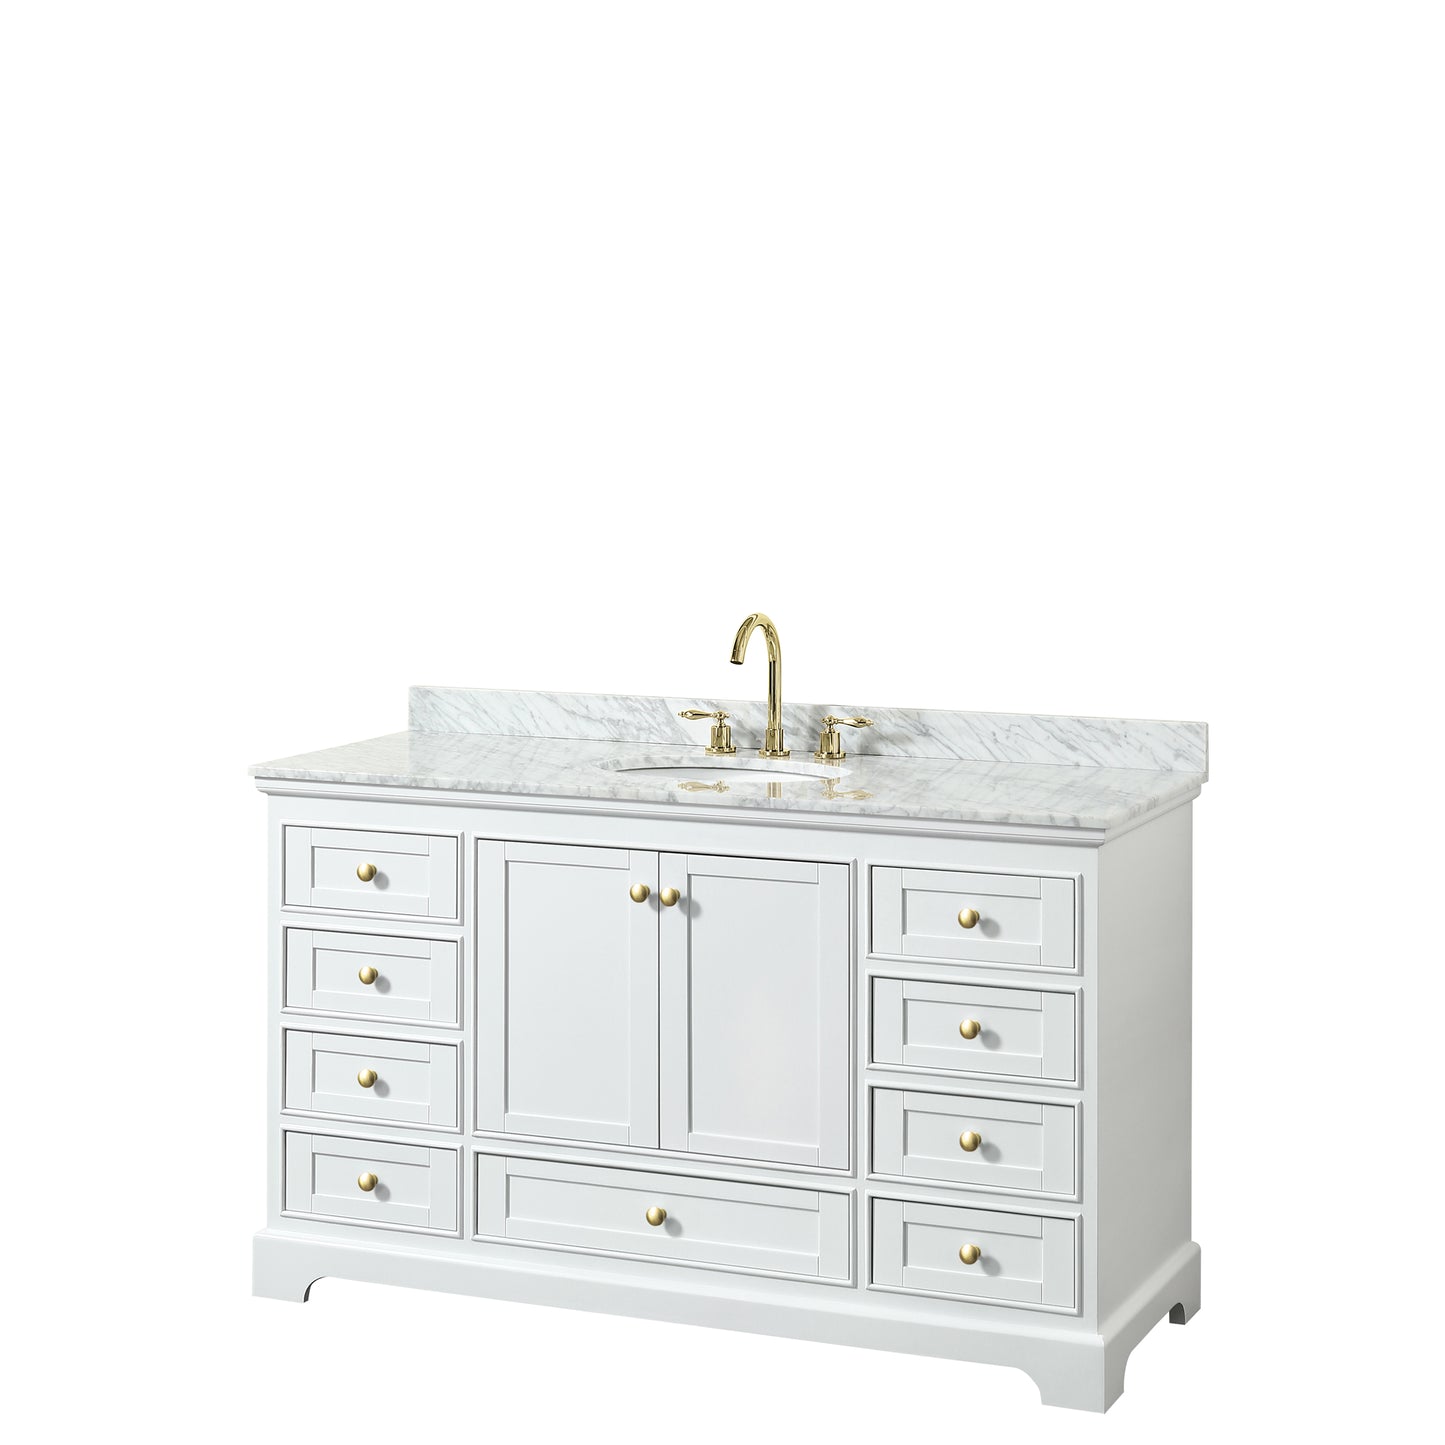 Wyndham Collection Deborah 60 Inch Single Bathroom Vanity in White, White Carrara Marble Countertop, Undermount Oval Sink, Brushed Gold Trim - Luxe Bathroom Vanities